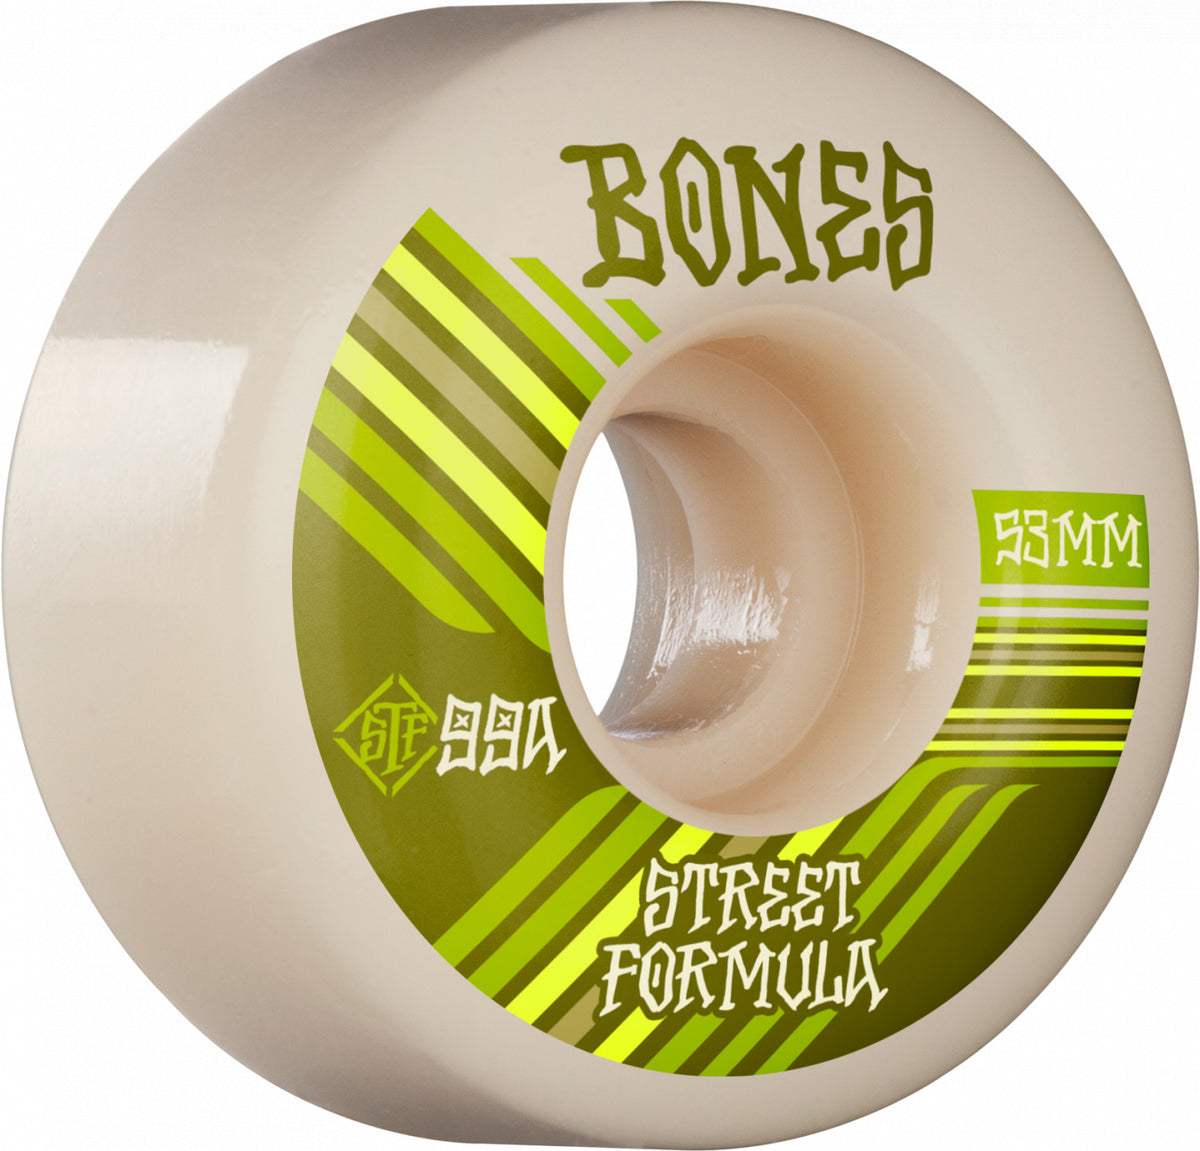 Bones Retros V4 Wide Wheels, 53mm/99a